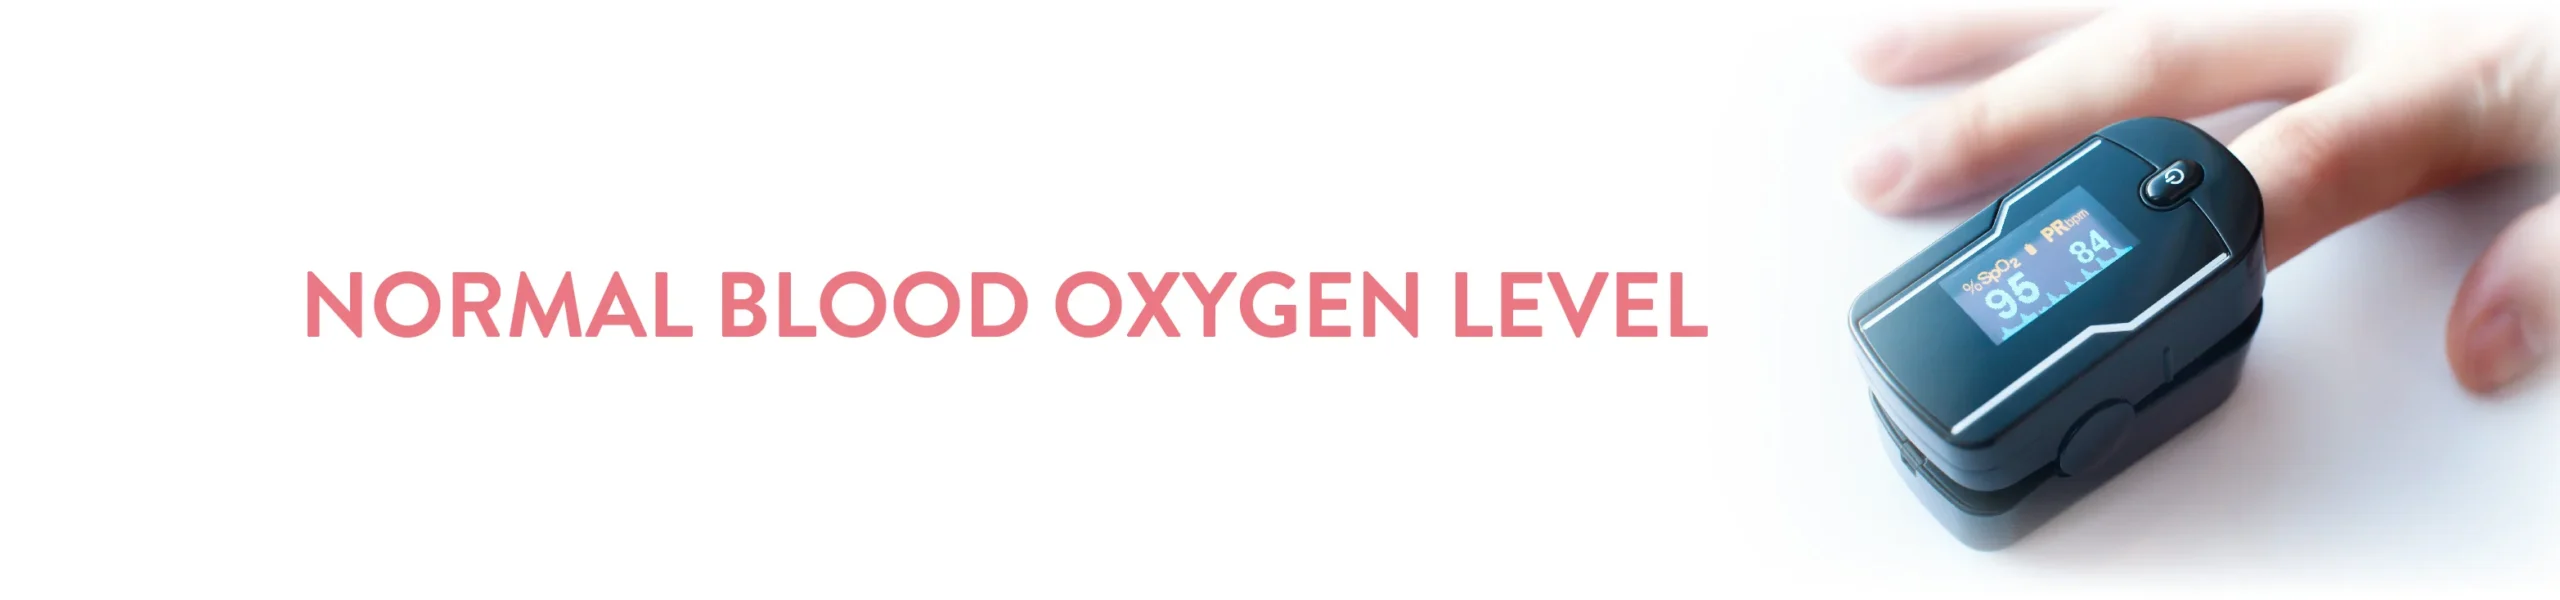 Normal blood oxygen level